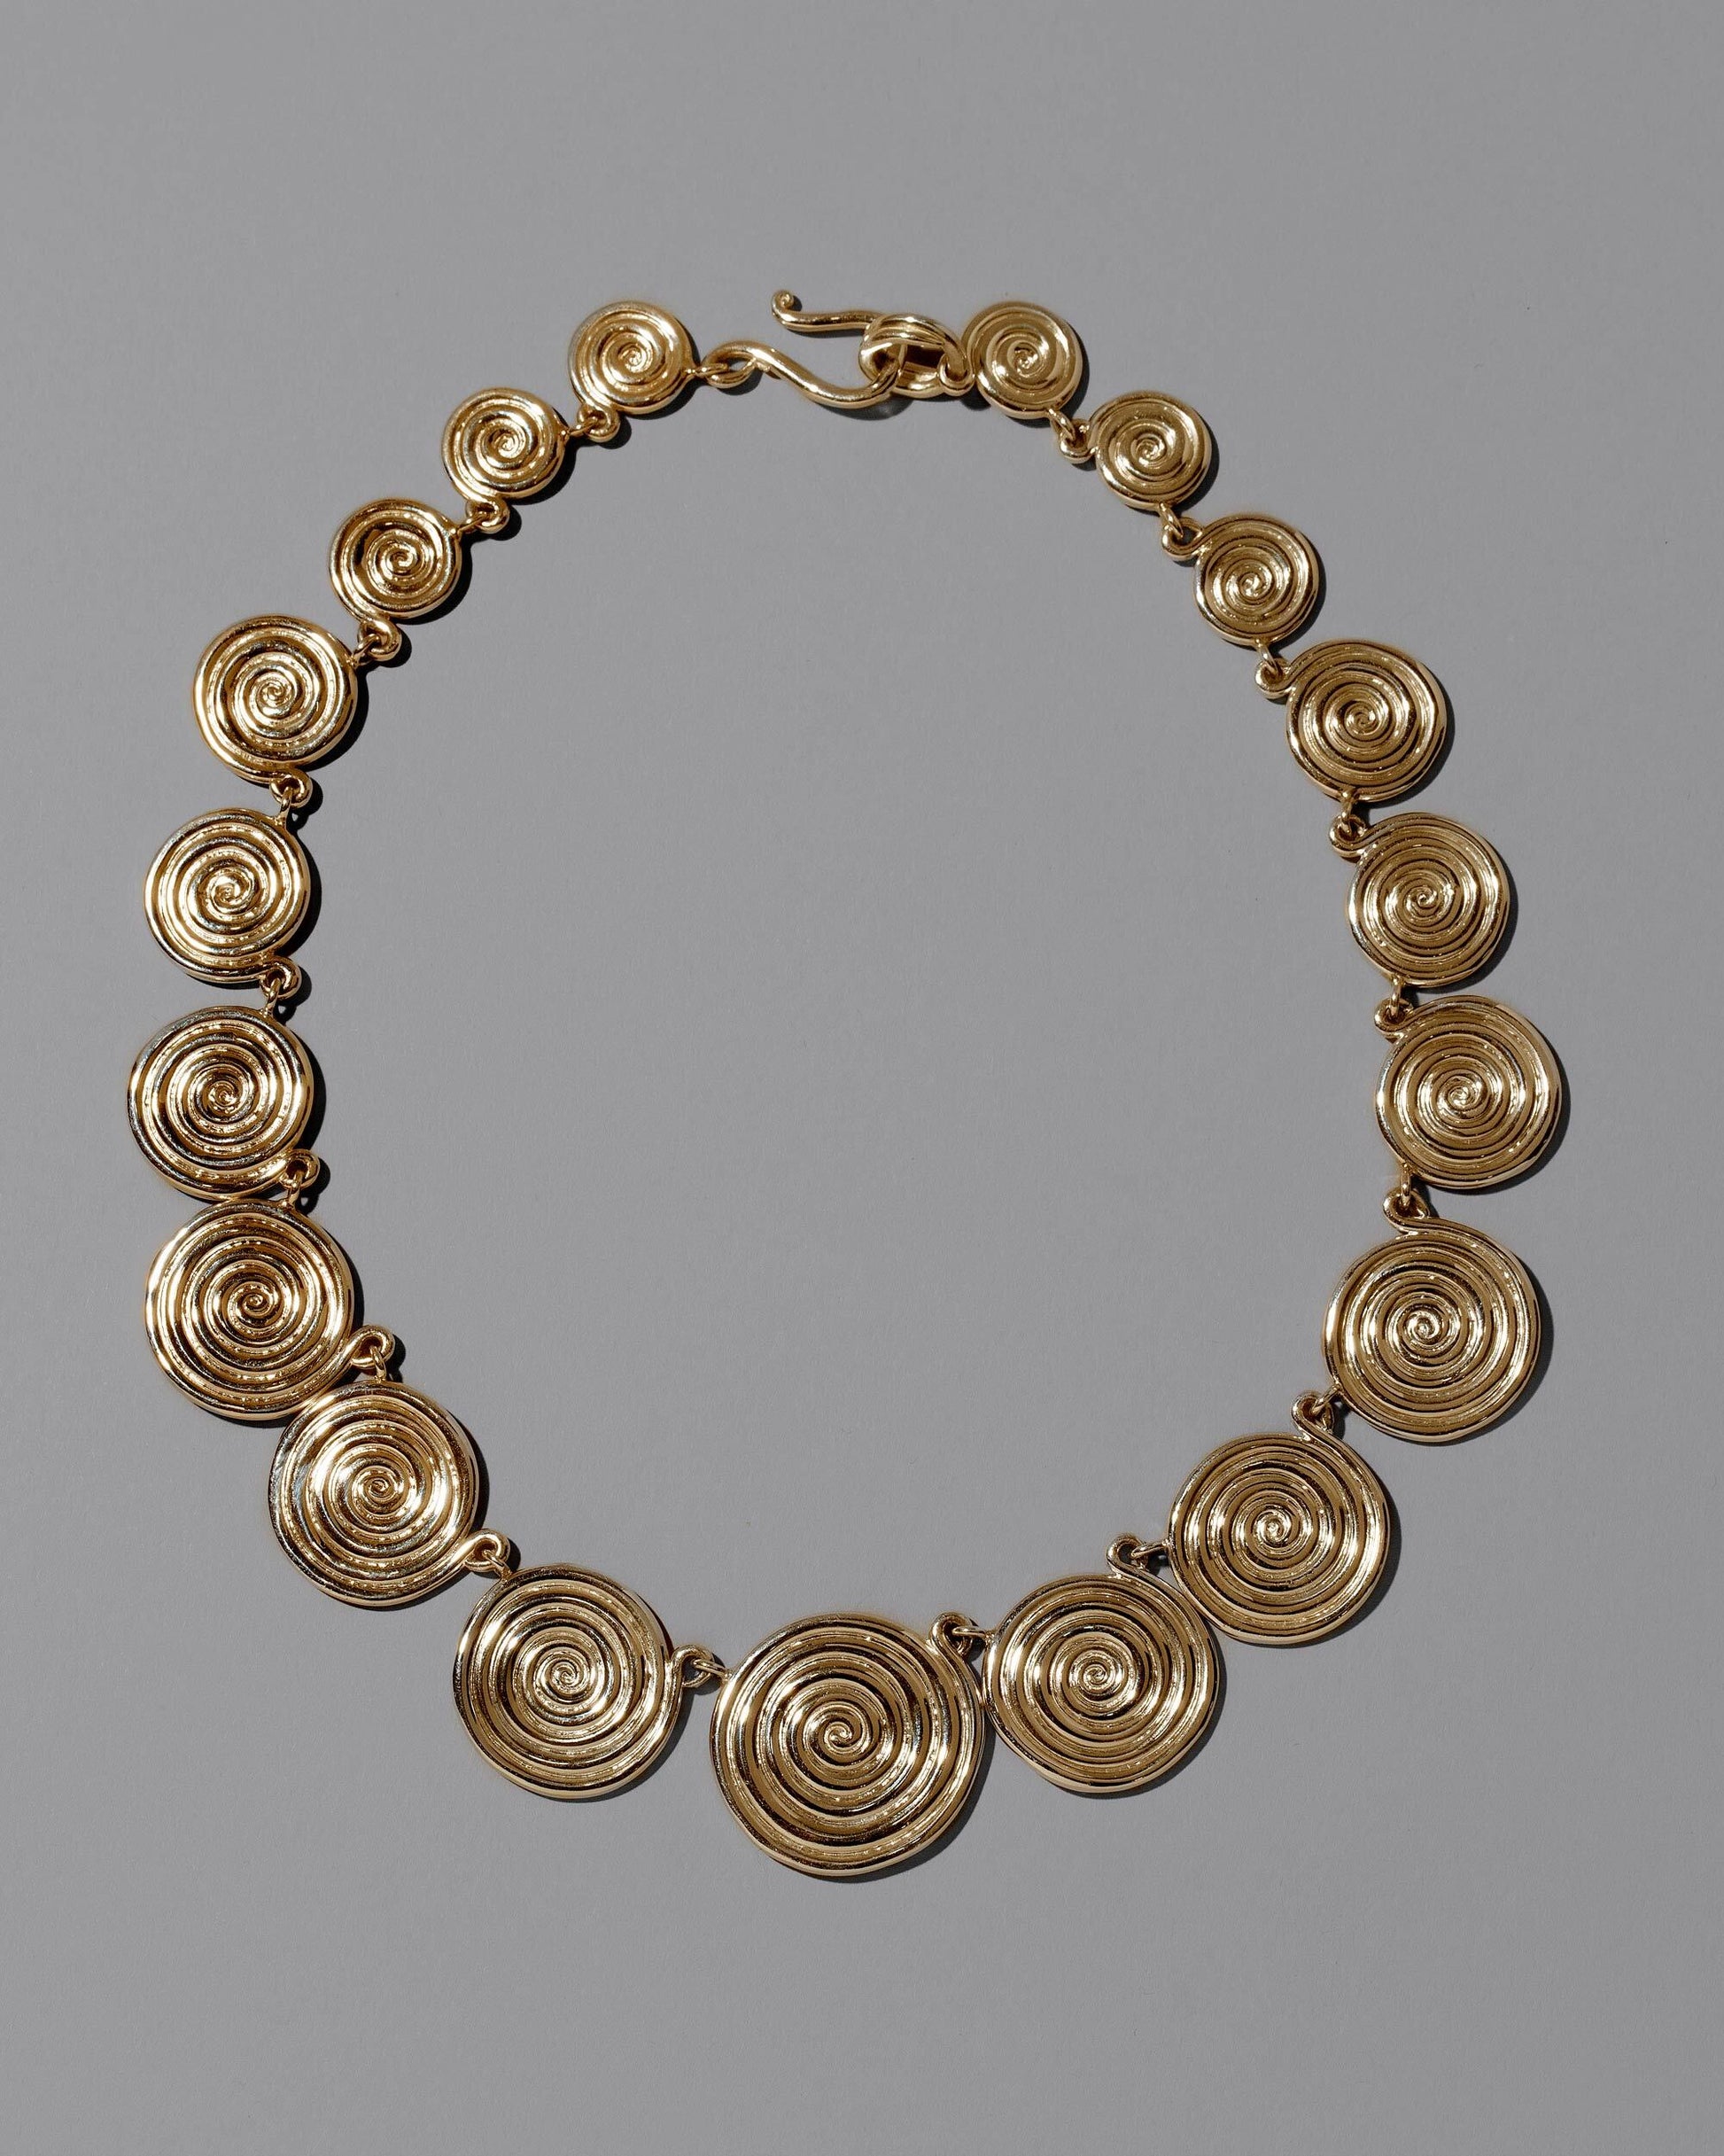 CRZM 22k Gold Serpentinite Necklace on light color background.